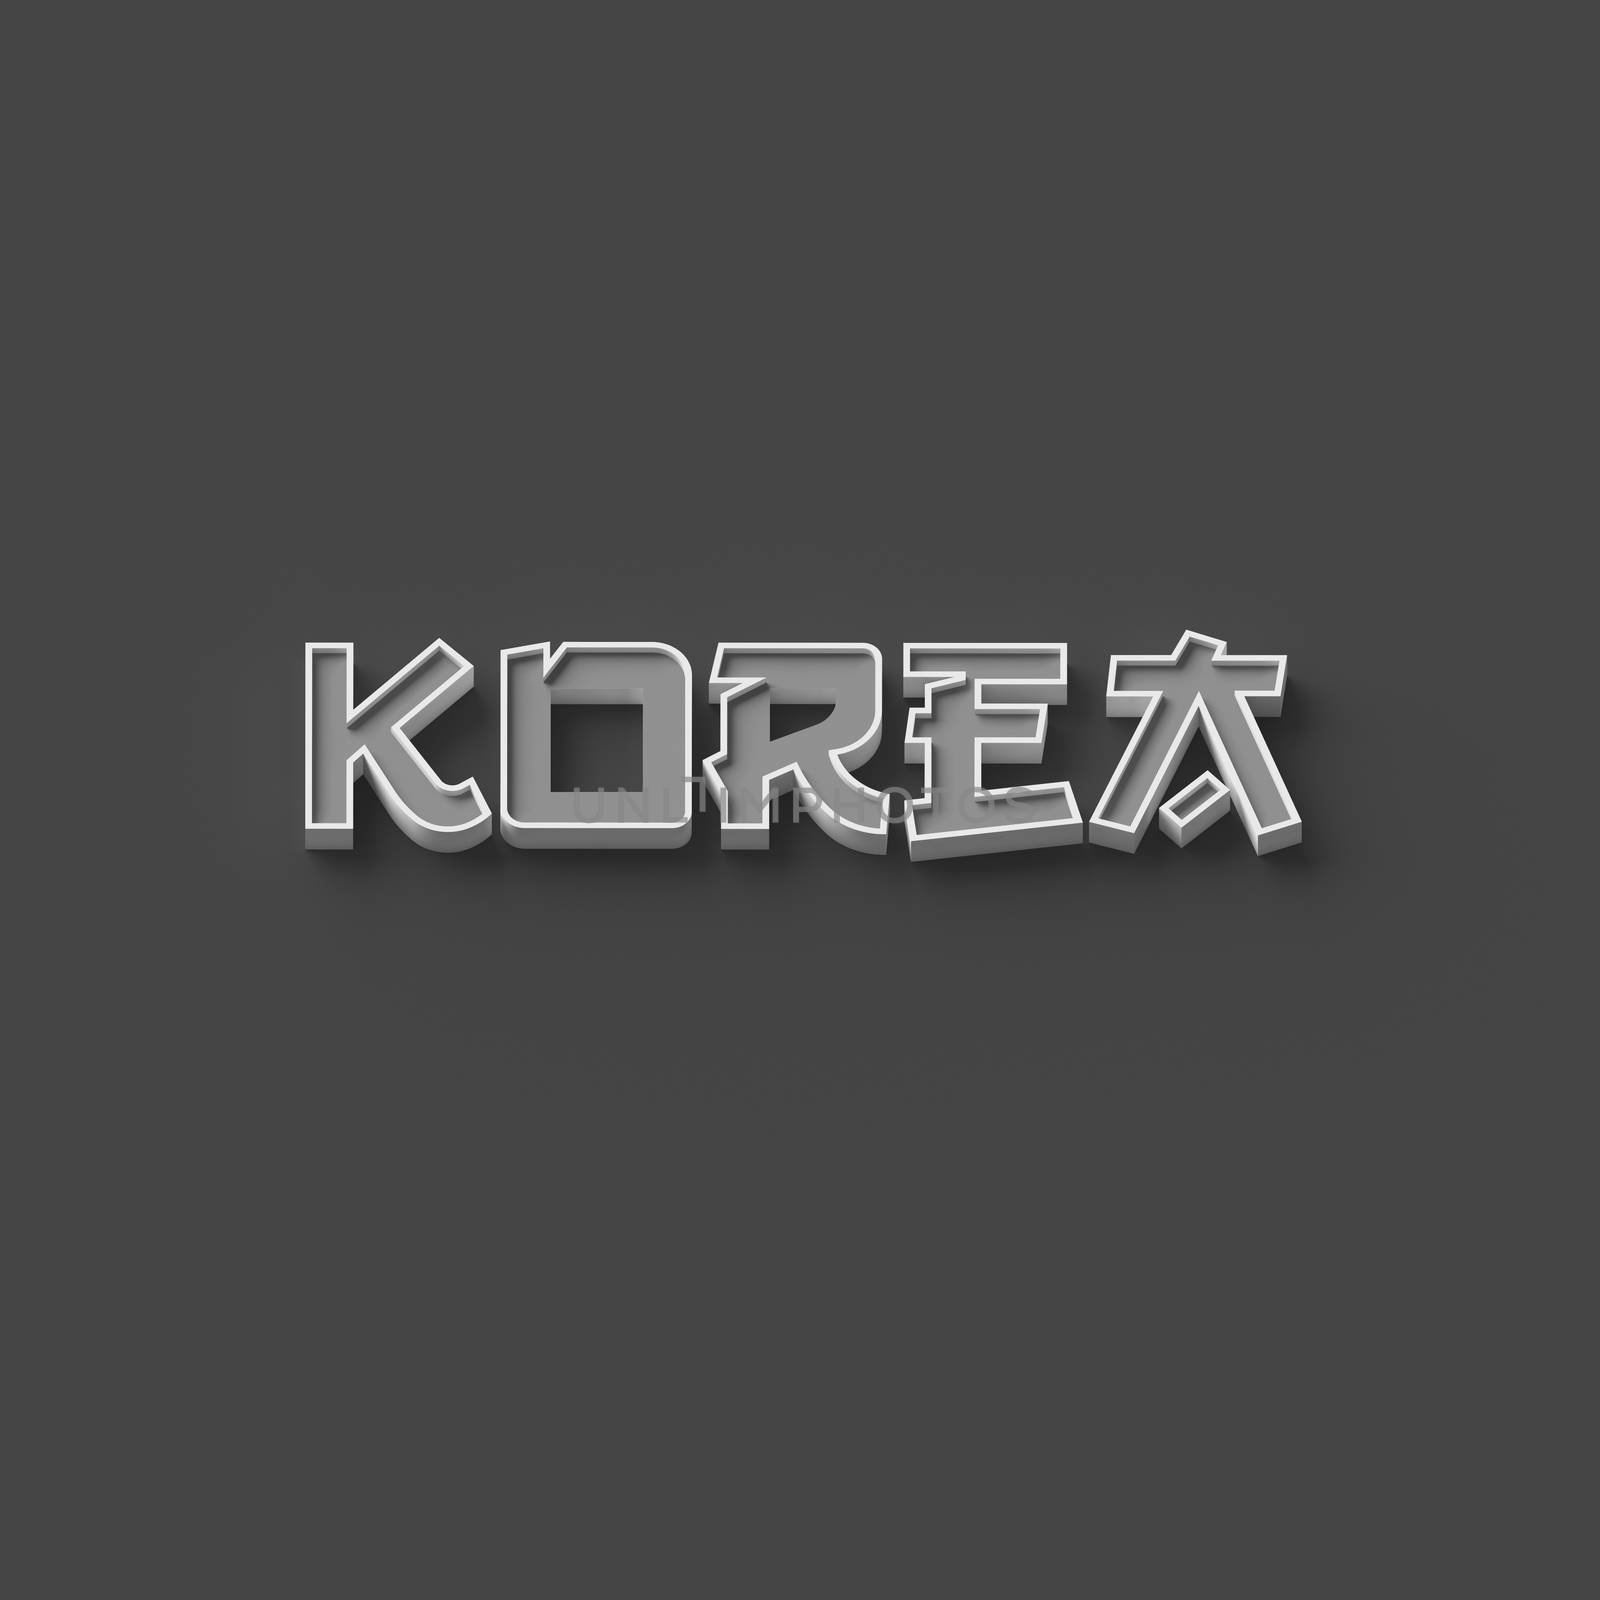 3D RENDERING WORDS "KOREA" ON BLACK PLAIN BACKGROUND